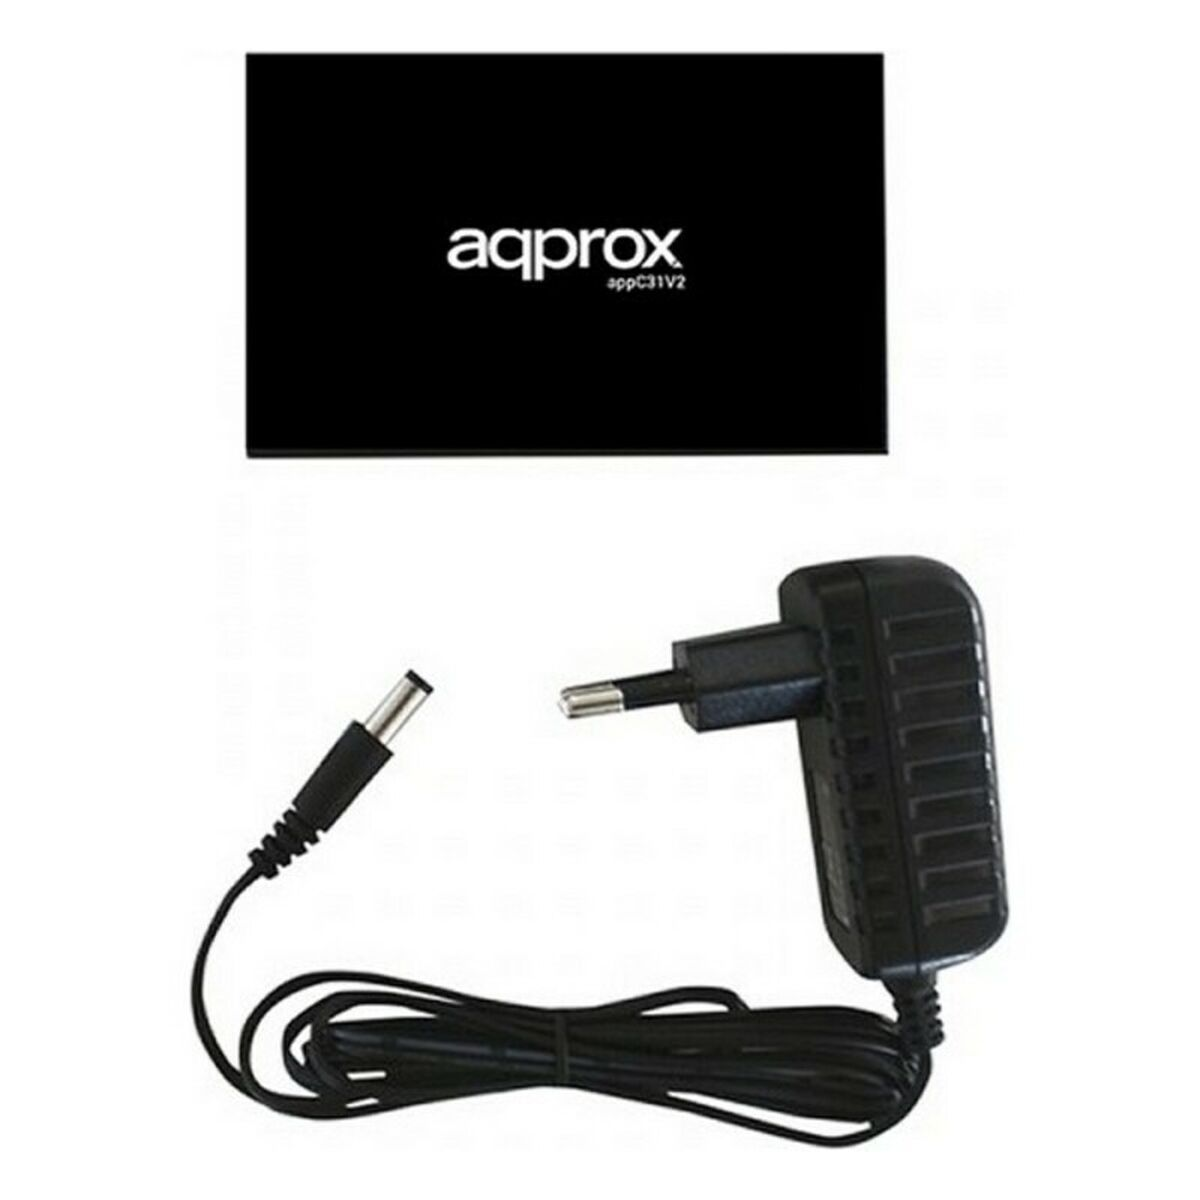 15 AV-Adapter/Konverter cm APPROX APPC31V2